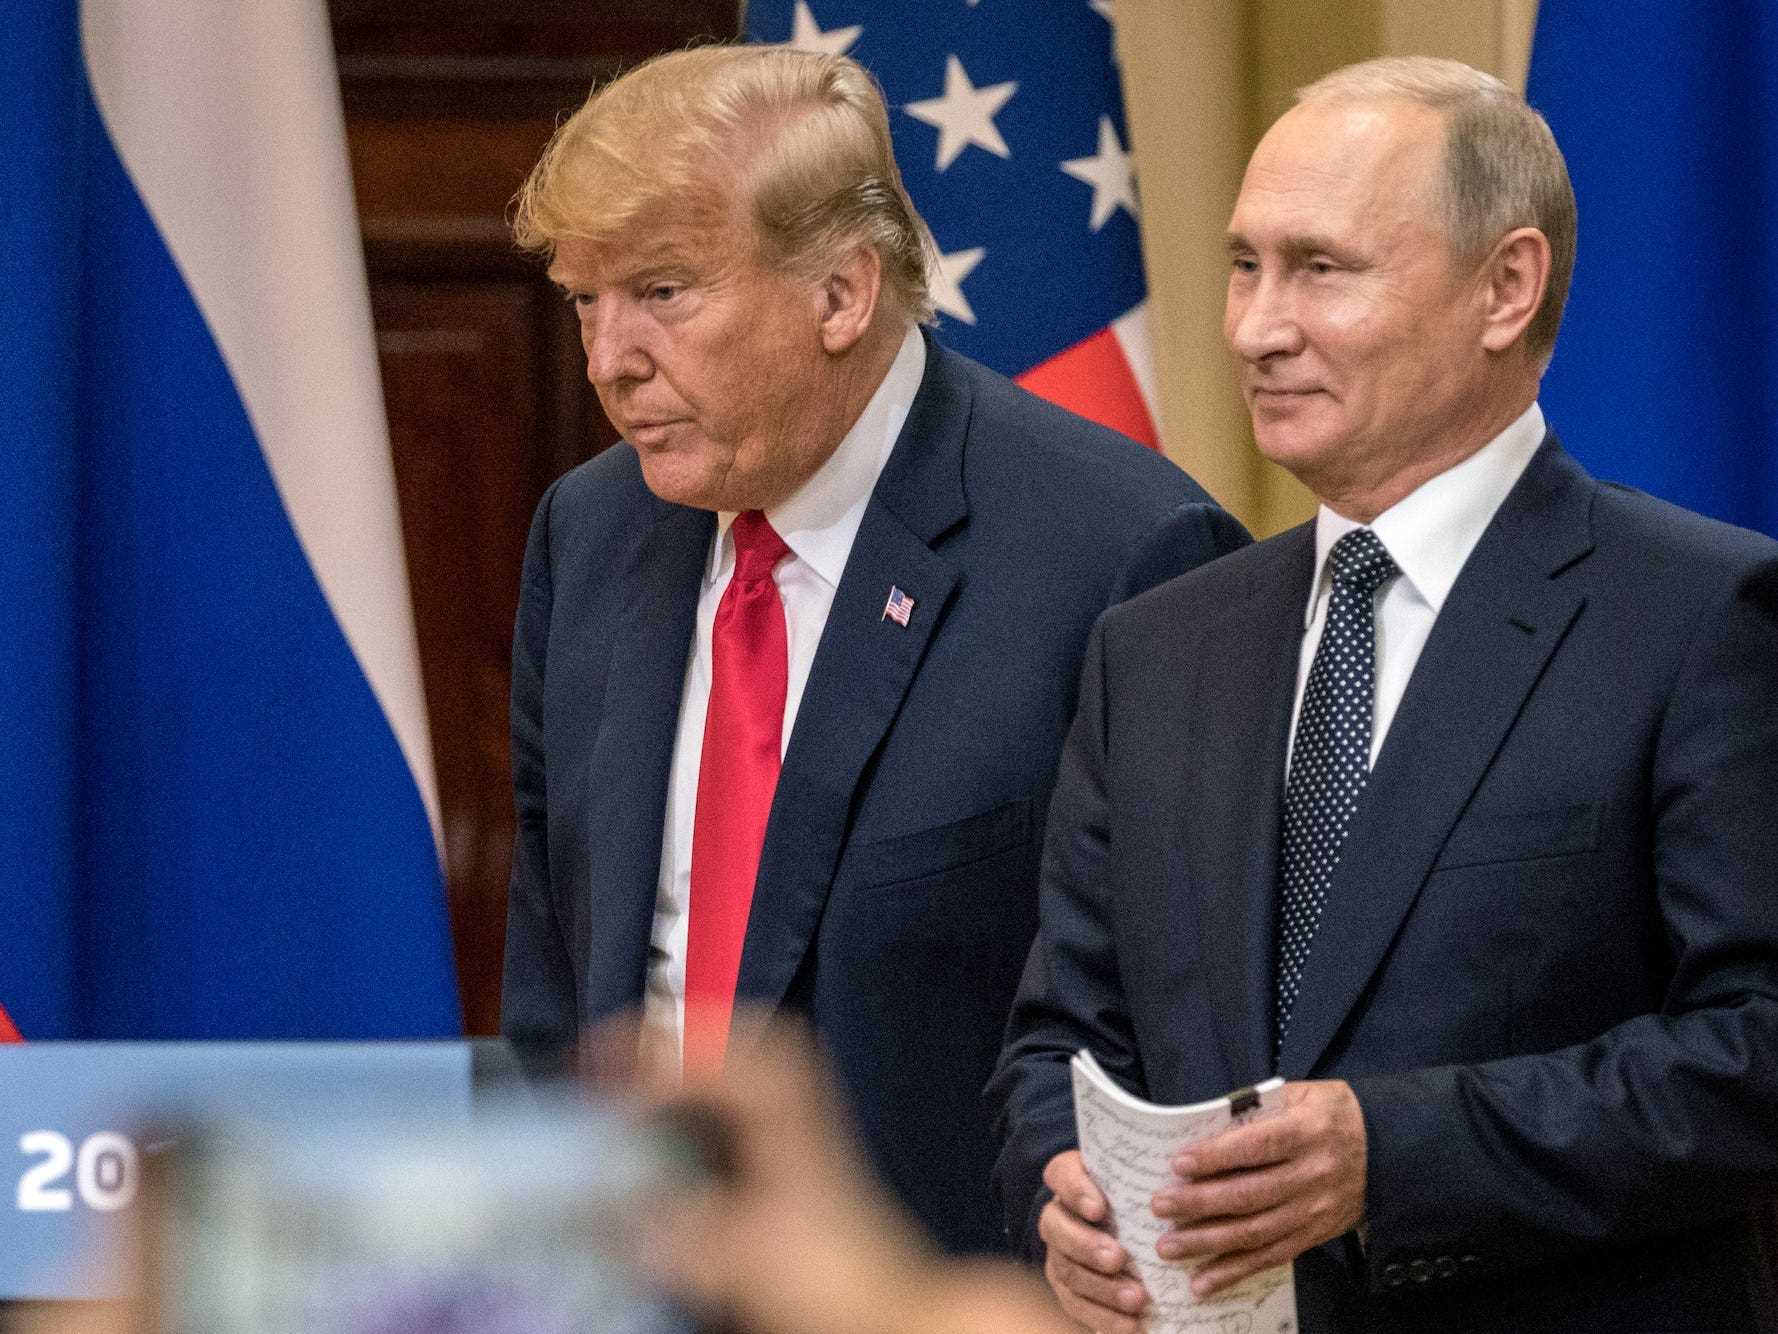 Donald Trump und Wladimir Putin